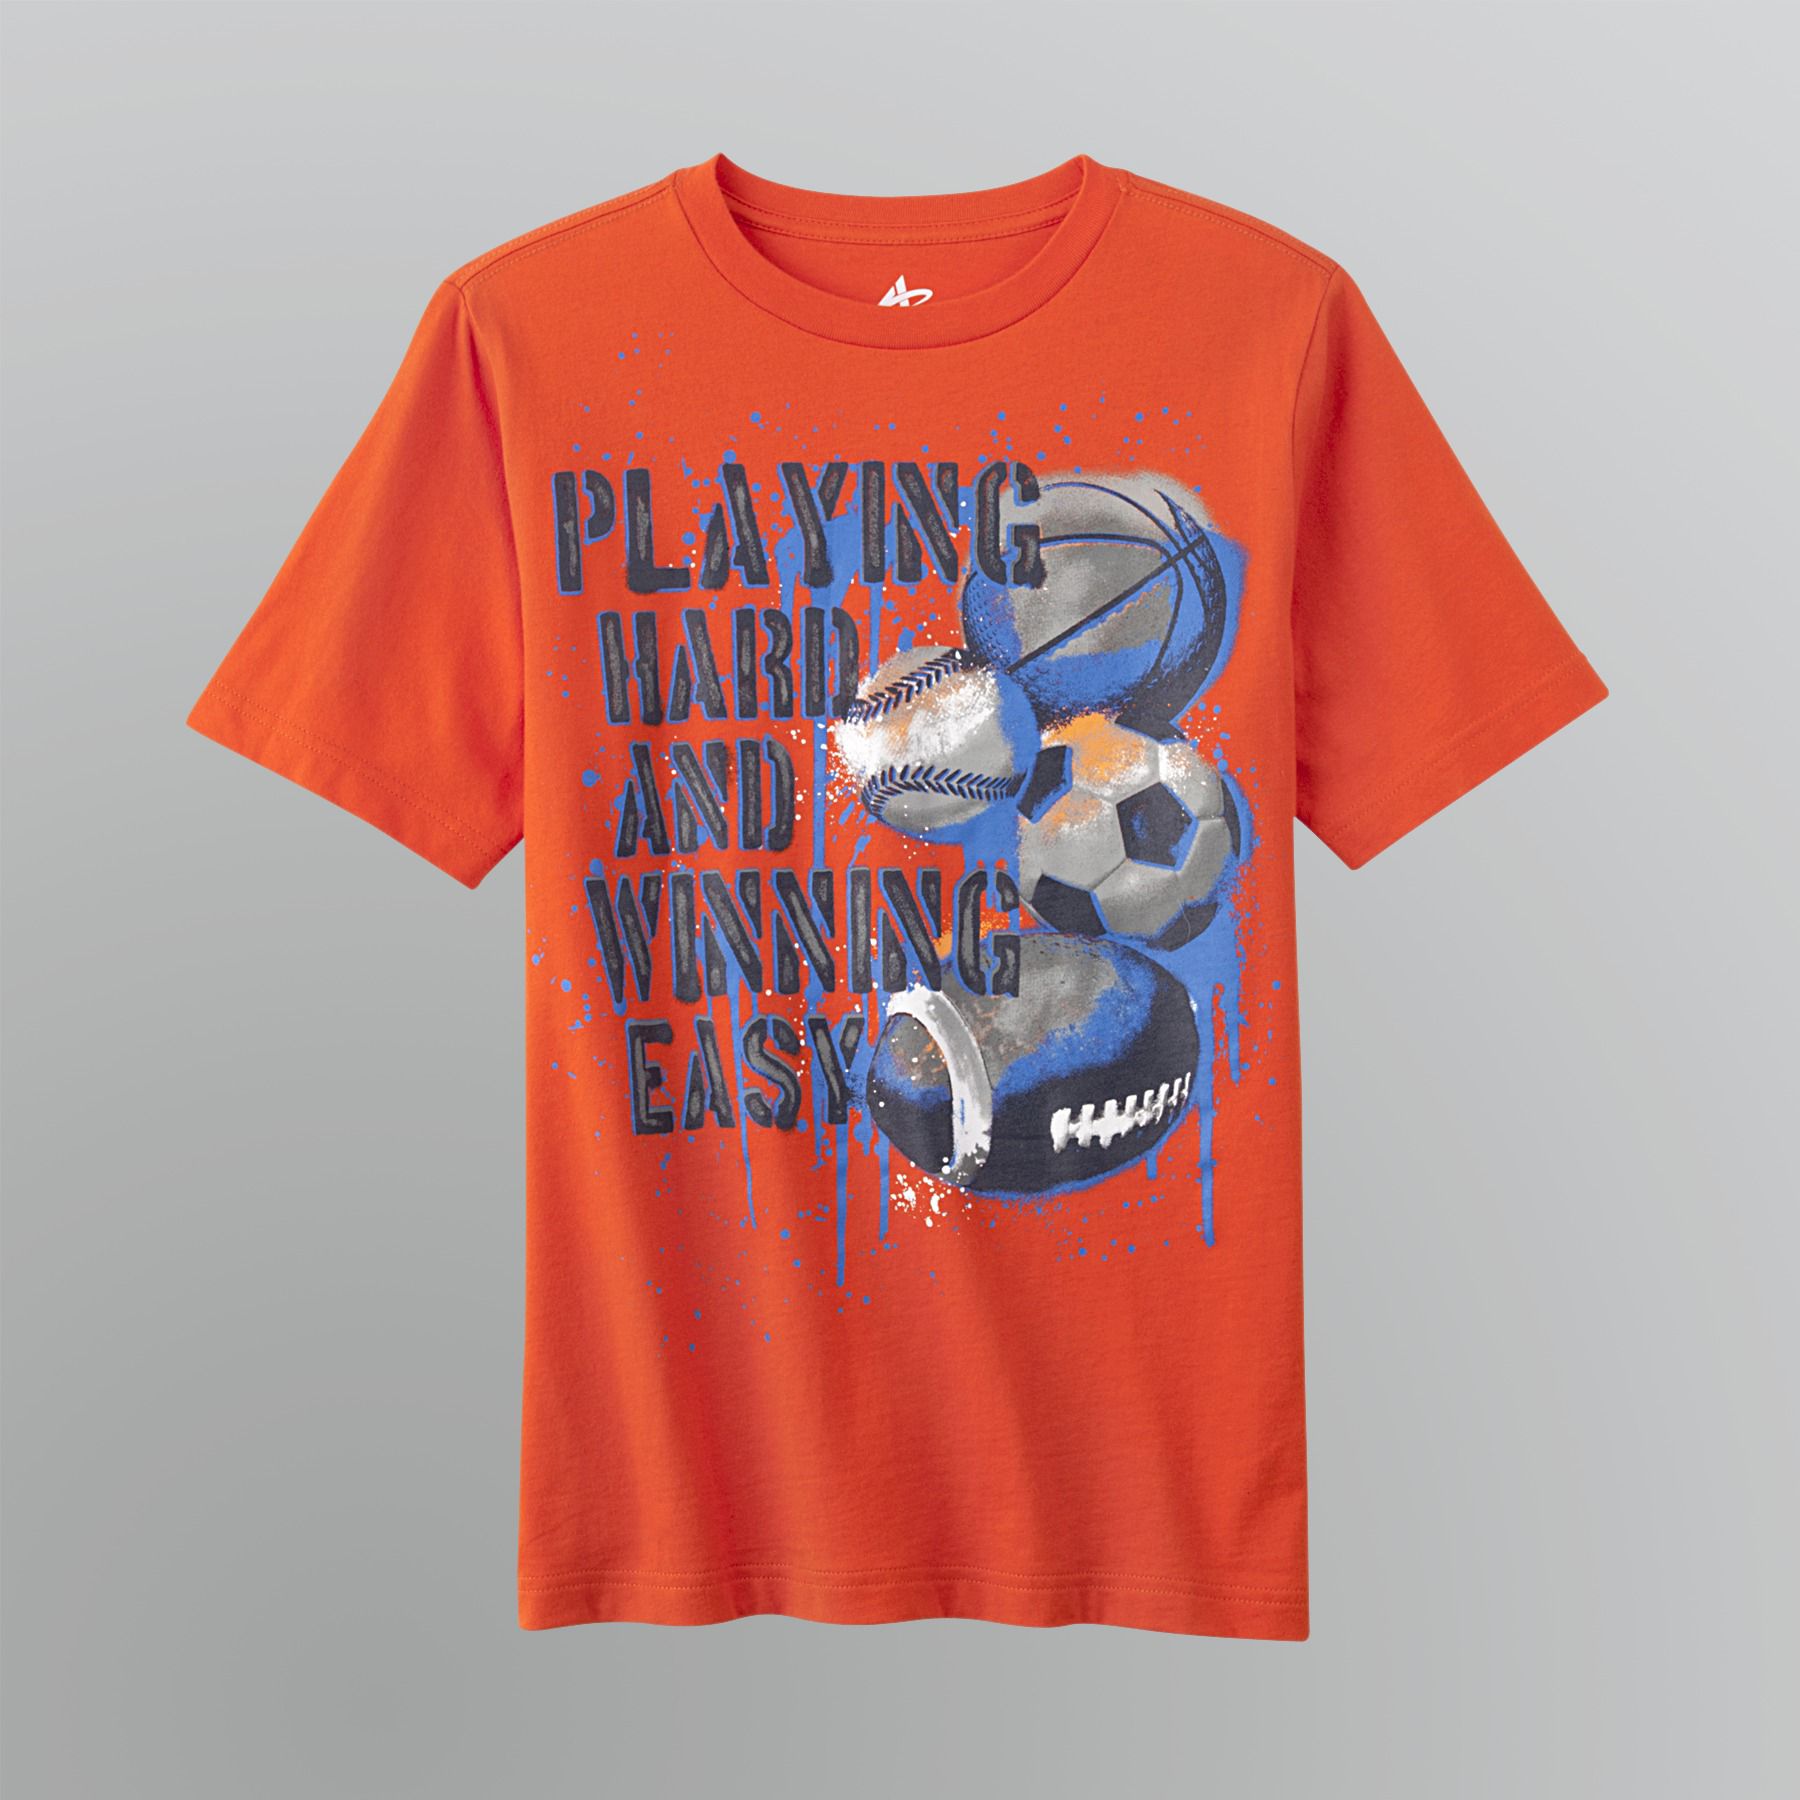 Athletech Boy's Graphic Sports T-shirt